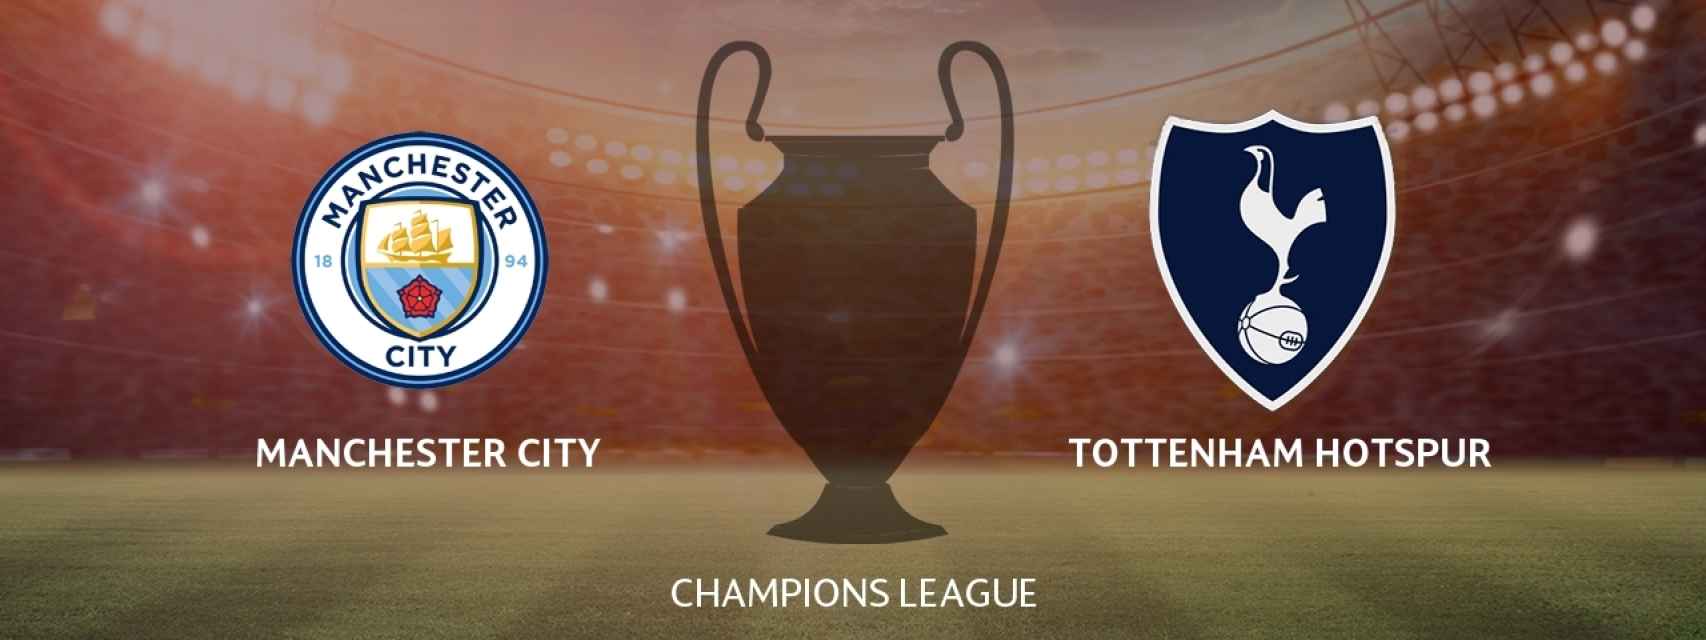 Manchester City - Tottenham